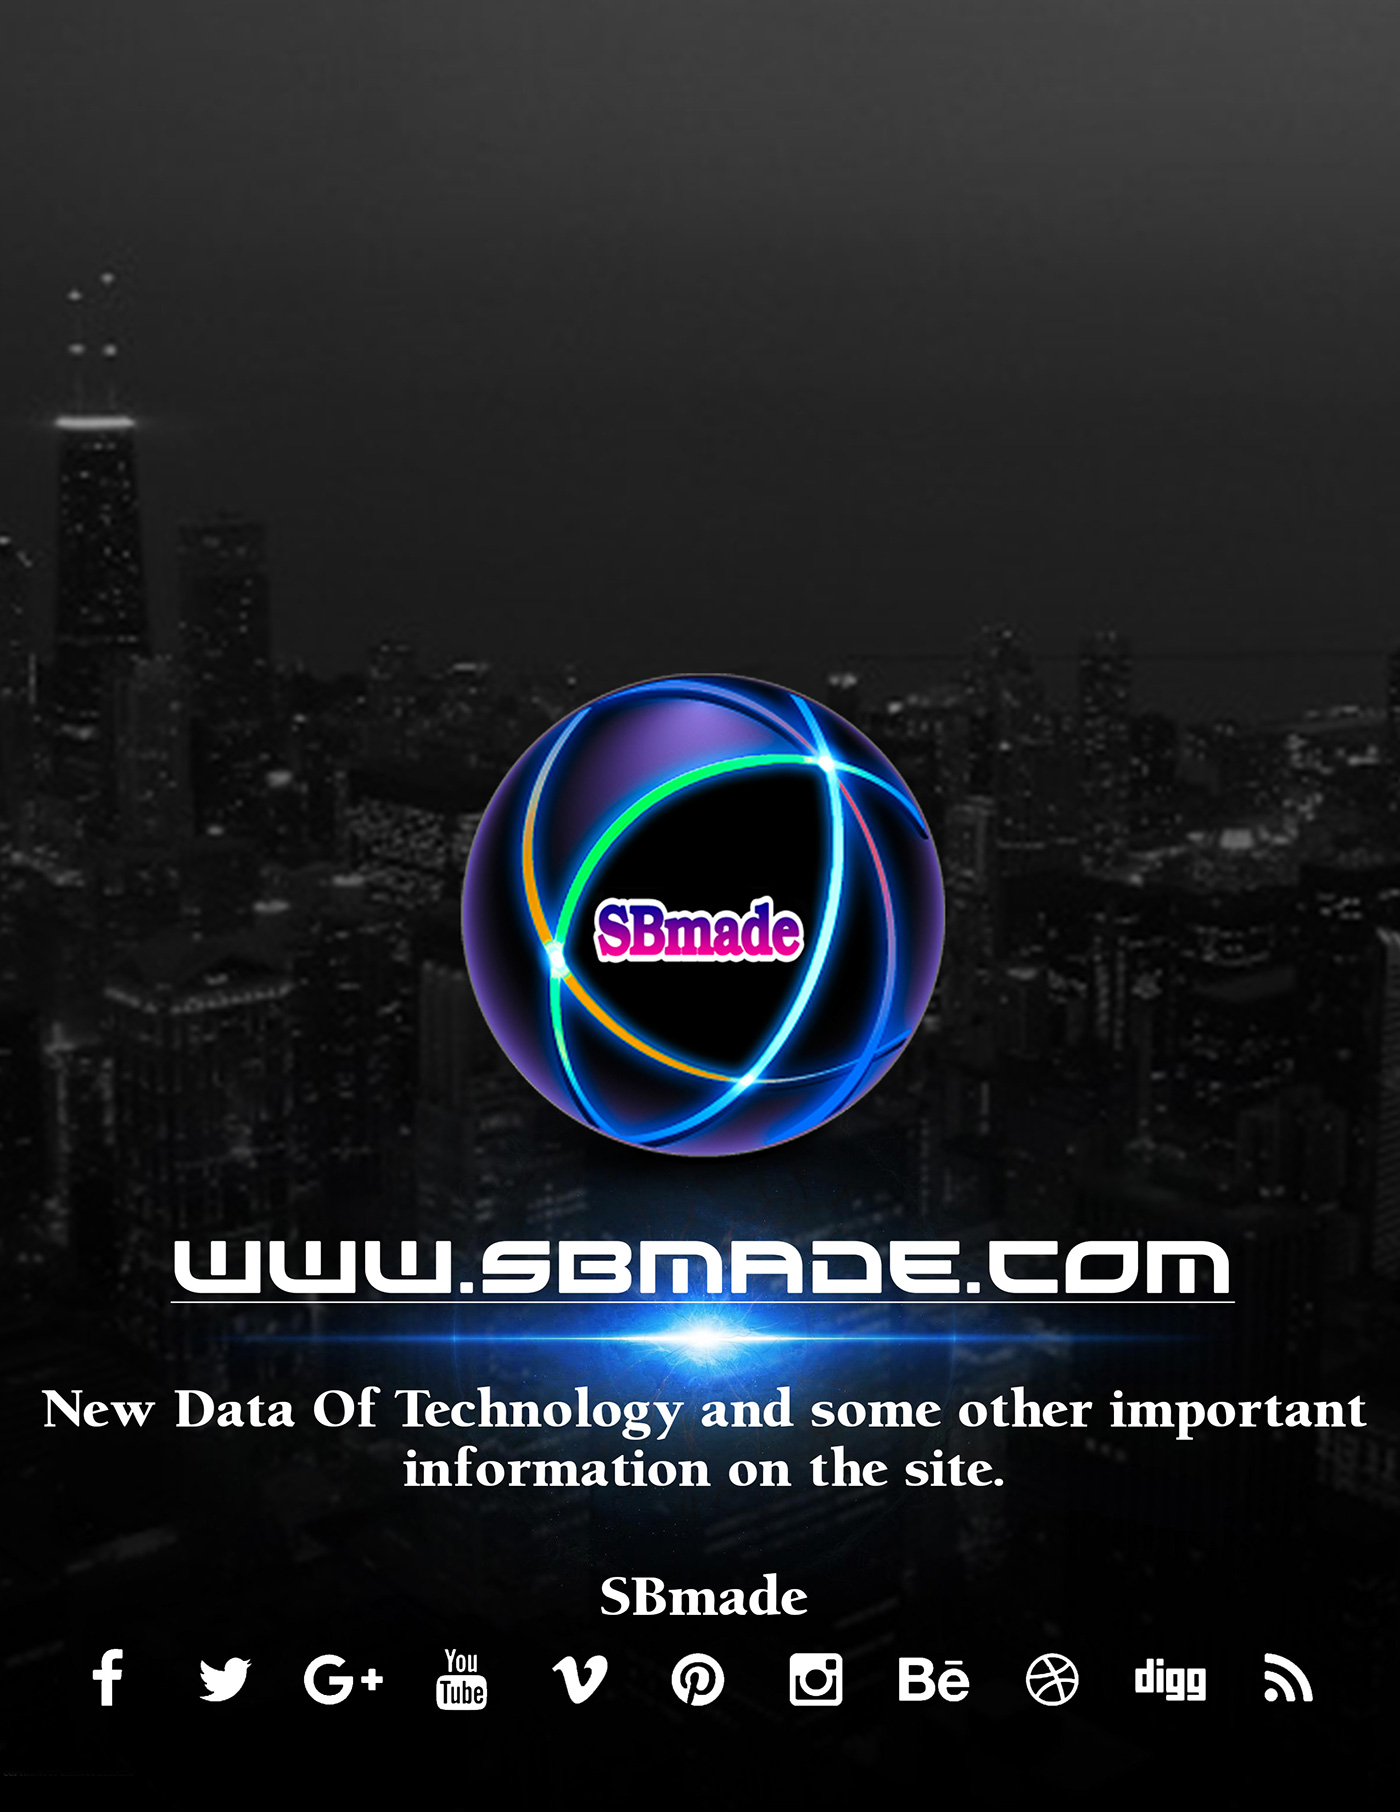 photoshop banner design SBmade Technology Data